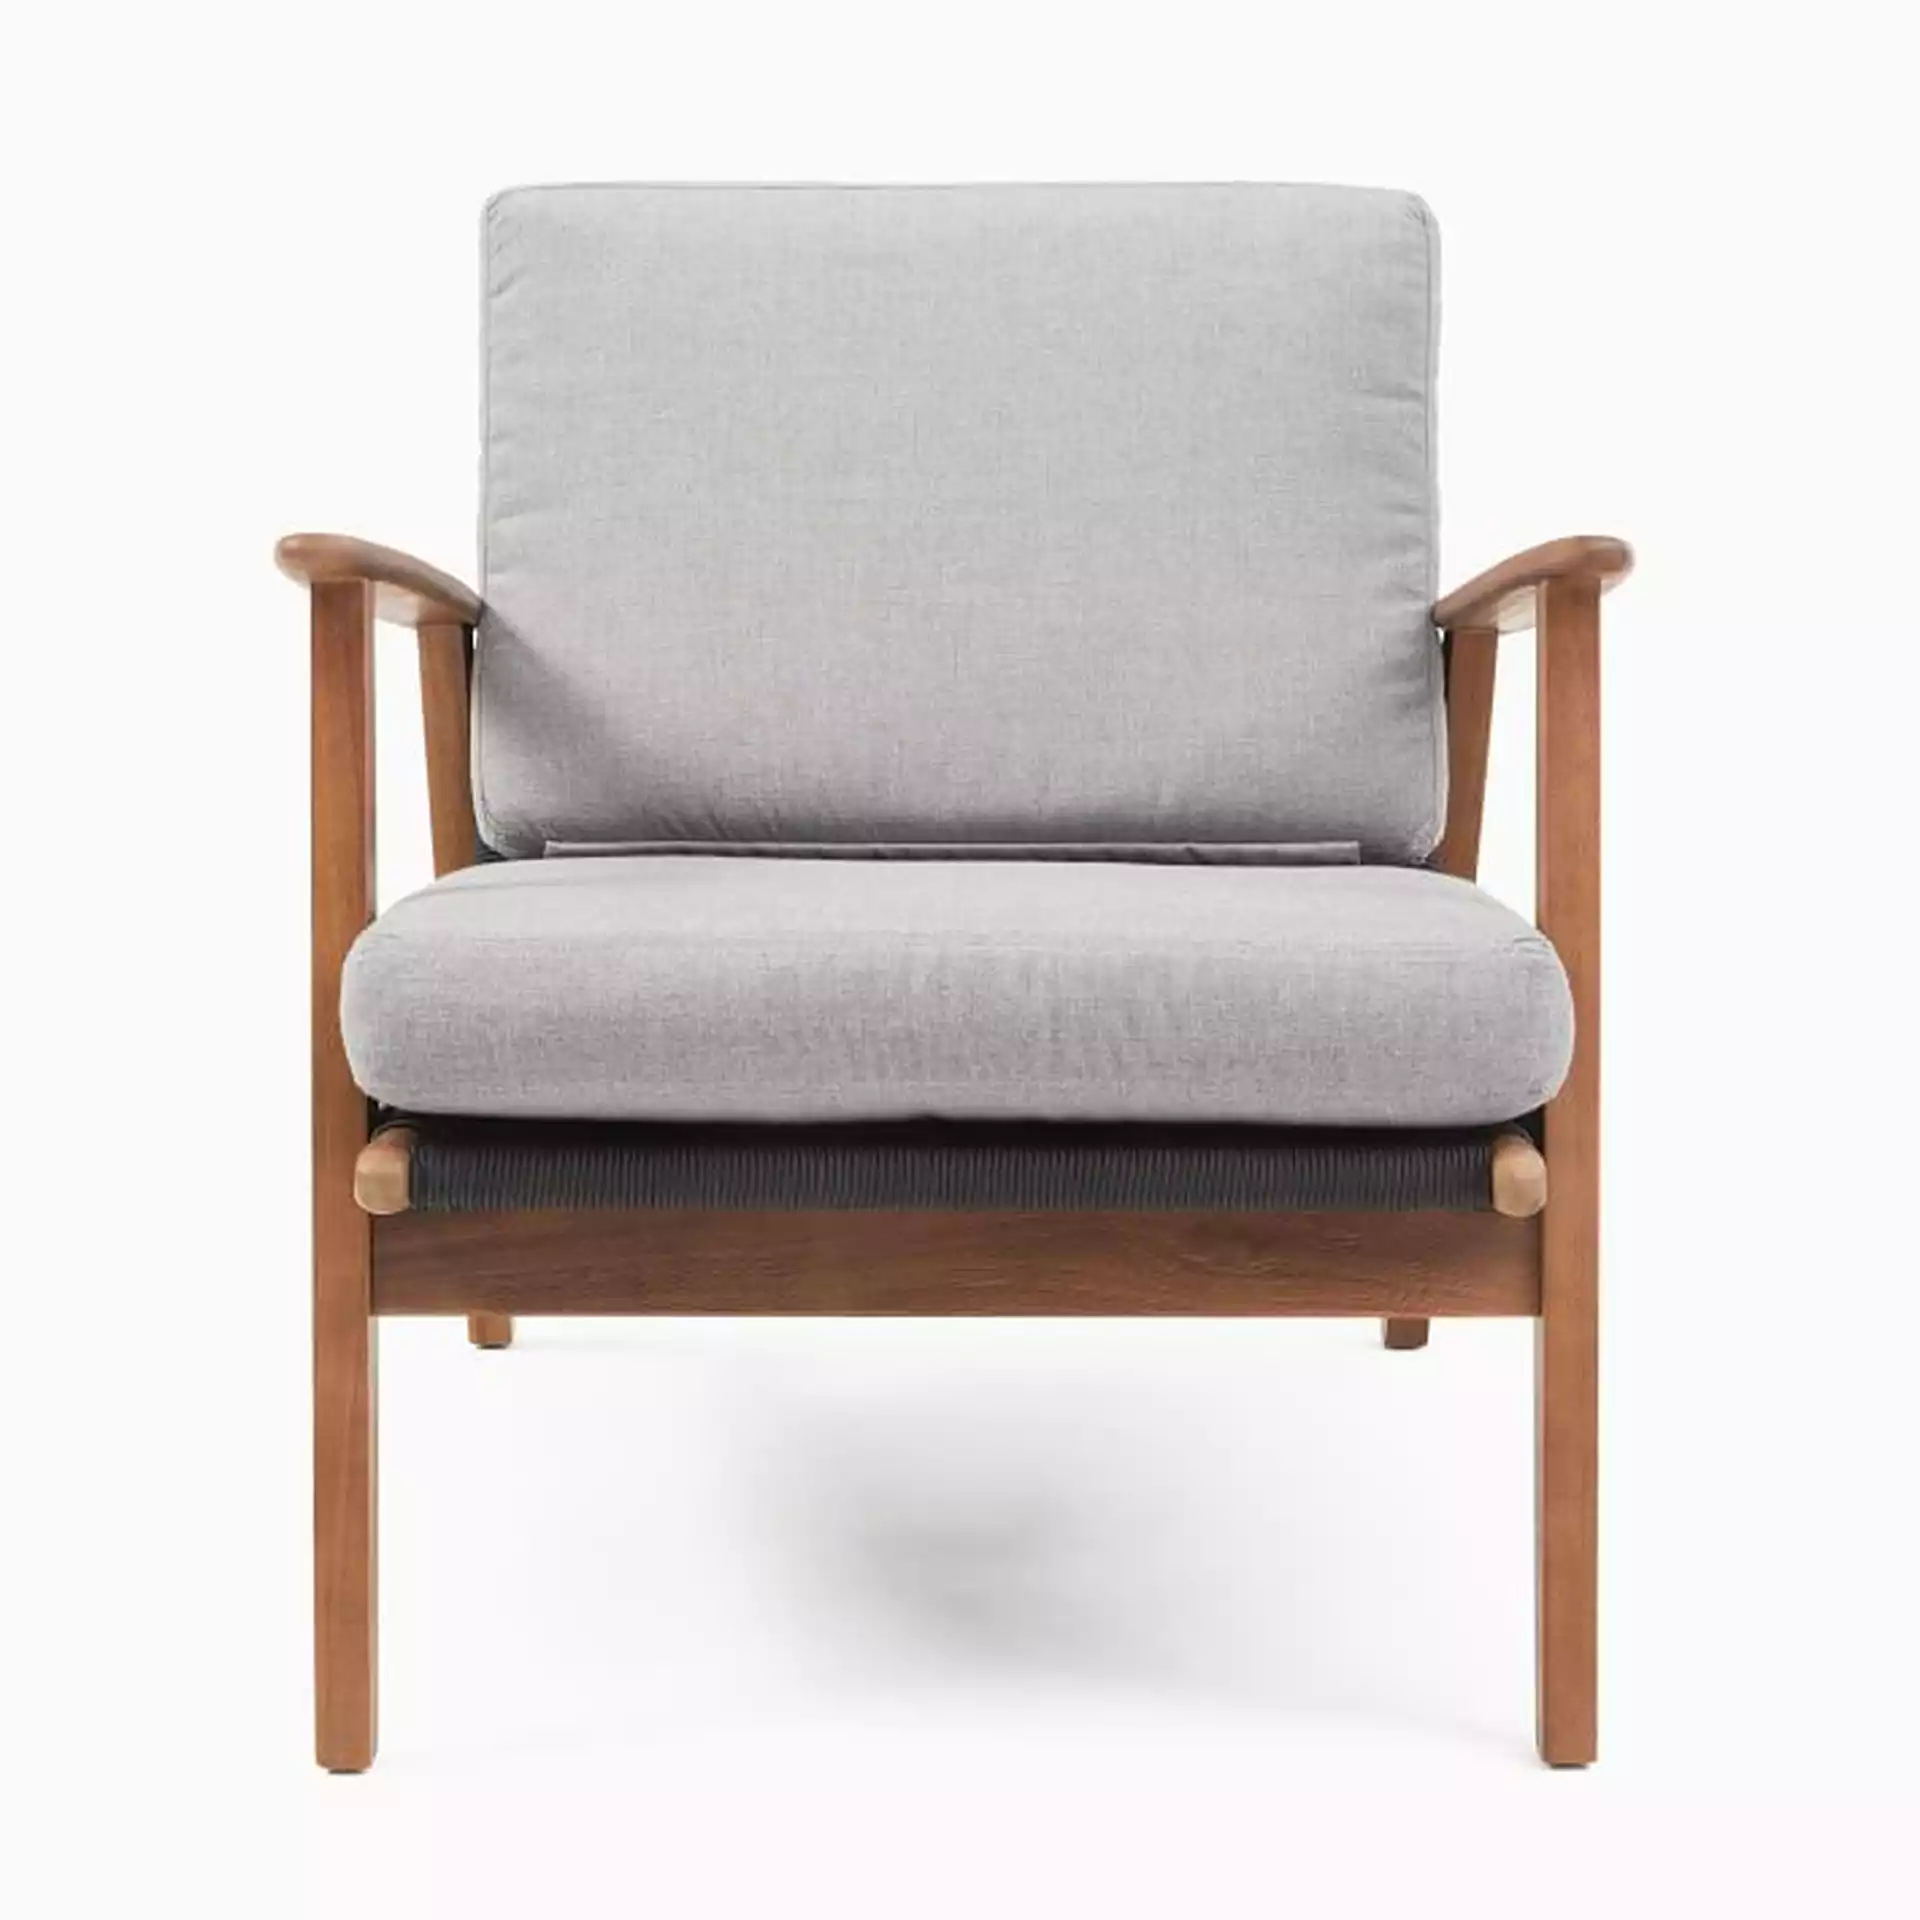 Catskill Lounge Chair, Wood & Woven, Vintage Dark Teak & Gray